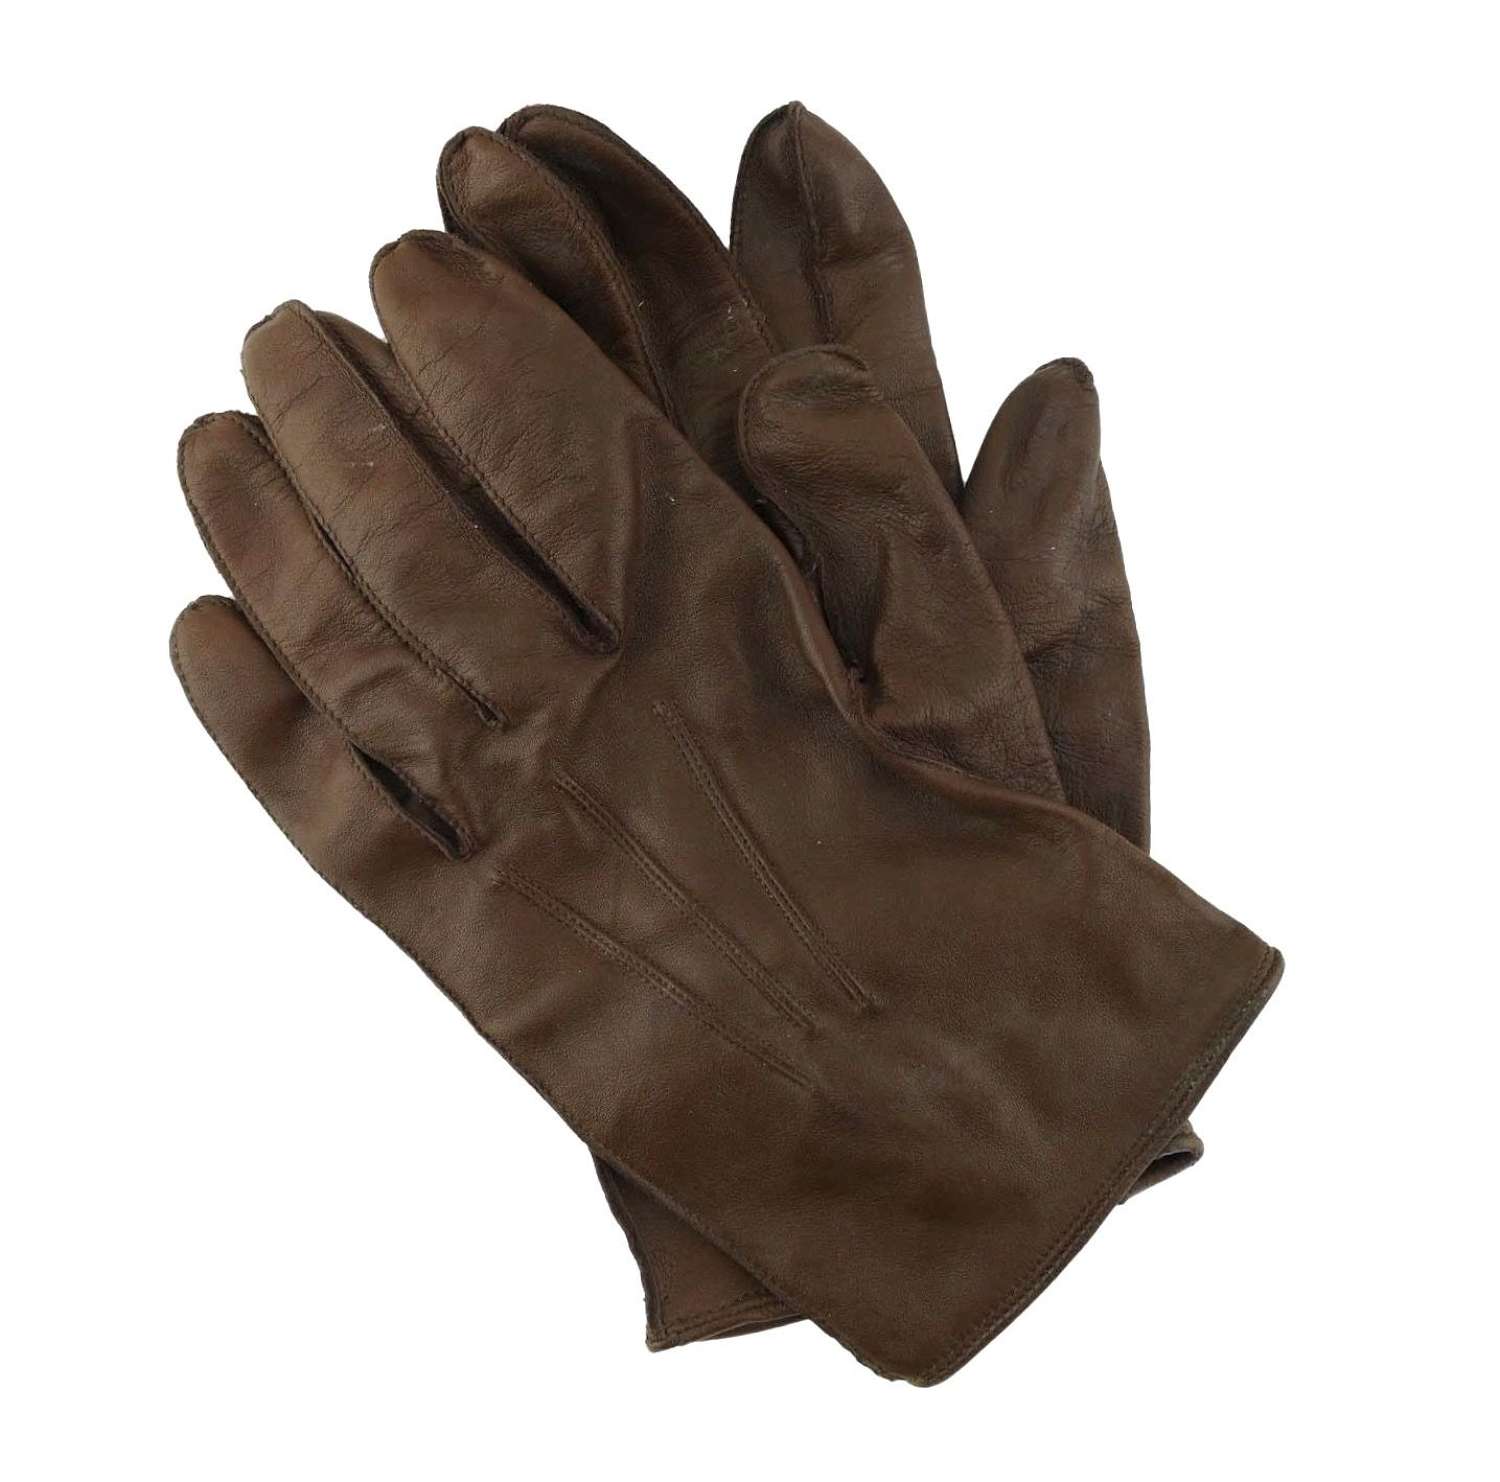 RAF officers dress gloves, post WW2